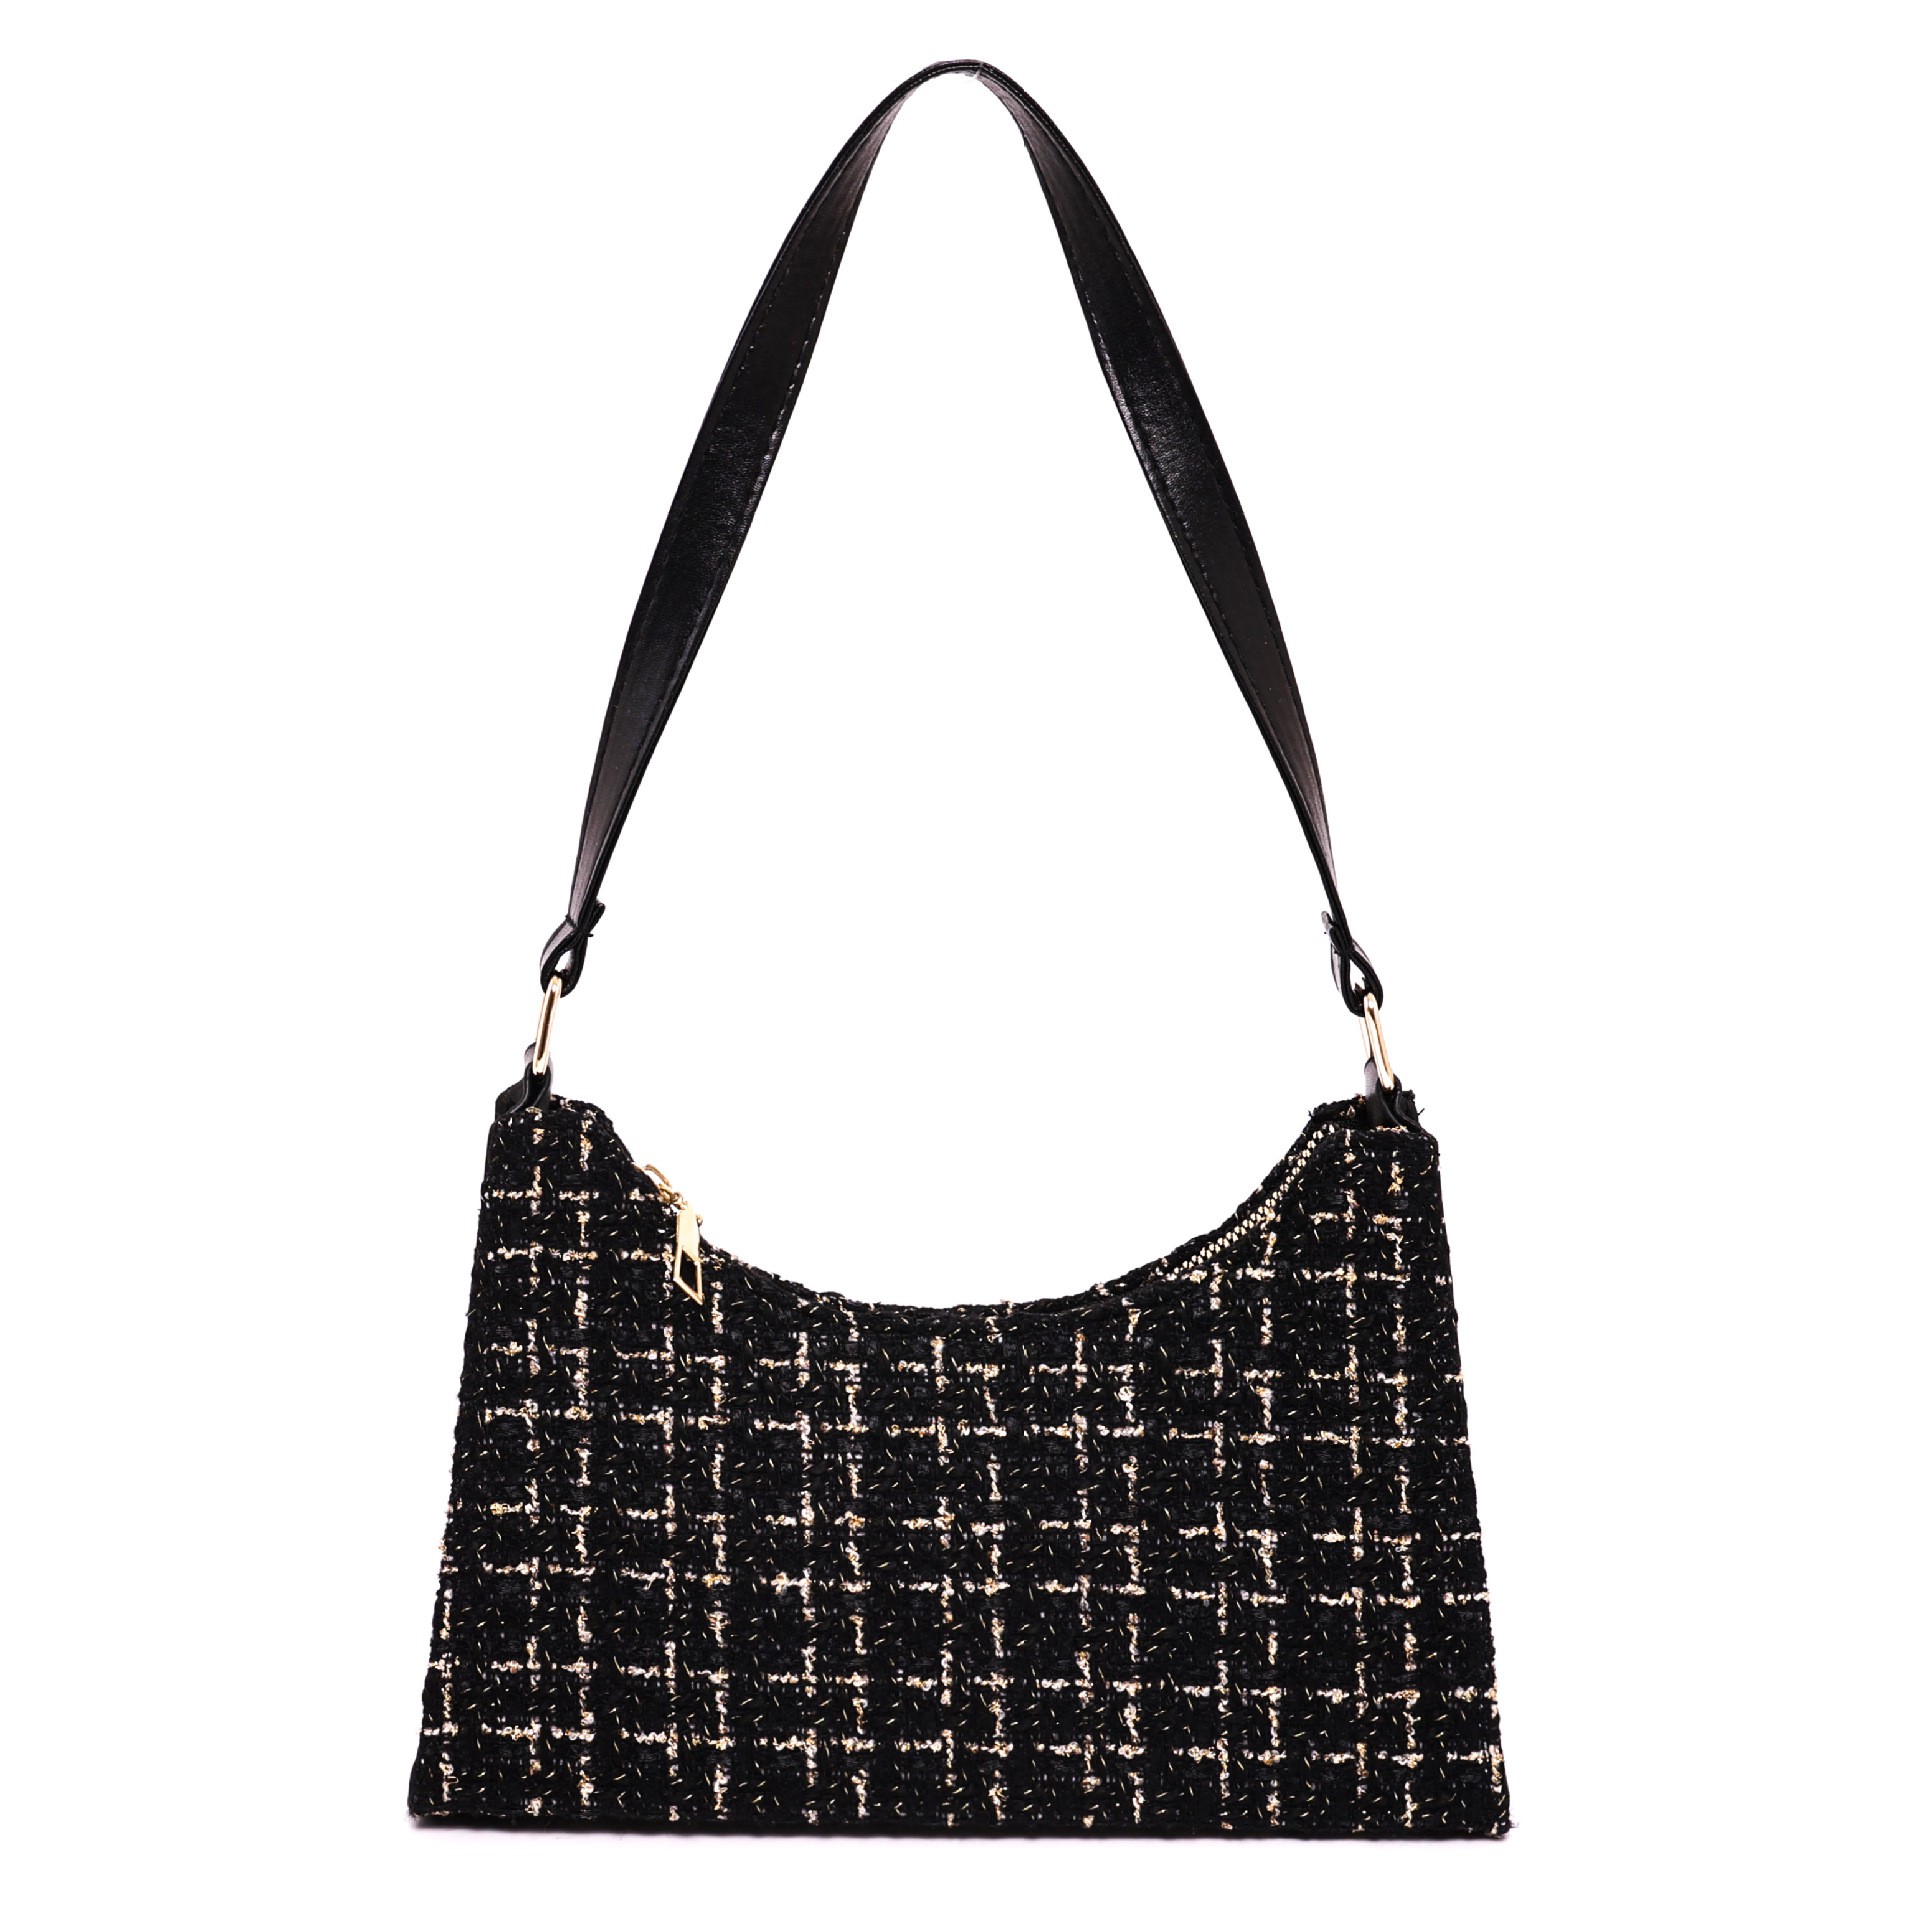 Ladies Small Fragrance Bag Handbag 2022 New Trendy Fashion Simple One Shoulder Underarm Bag Net Red Messenger Bag